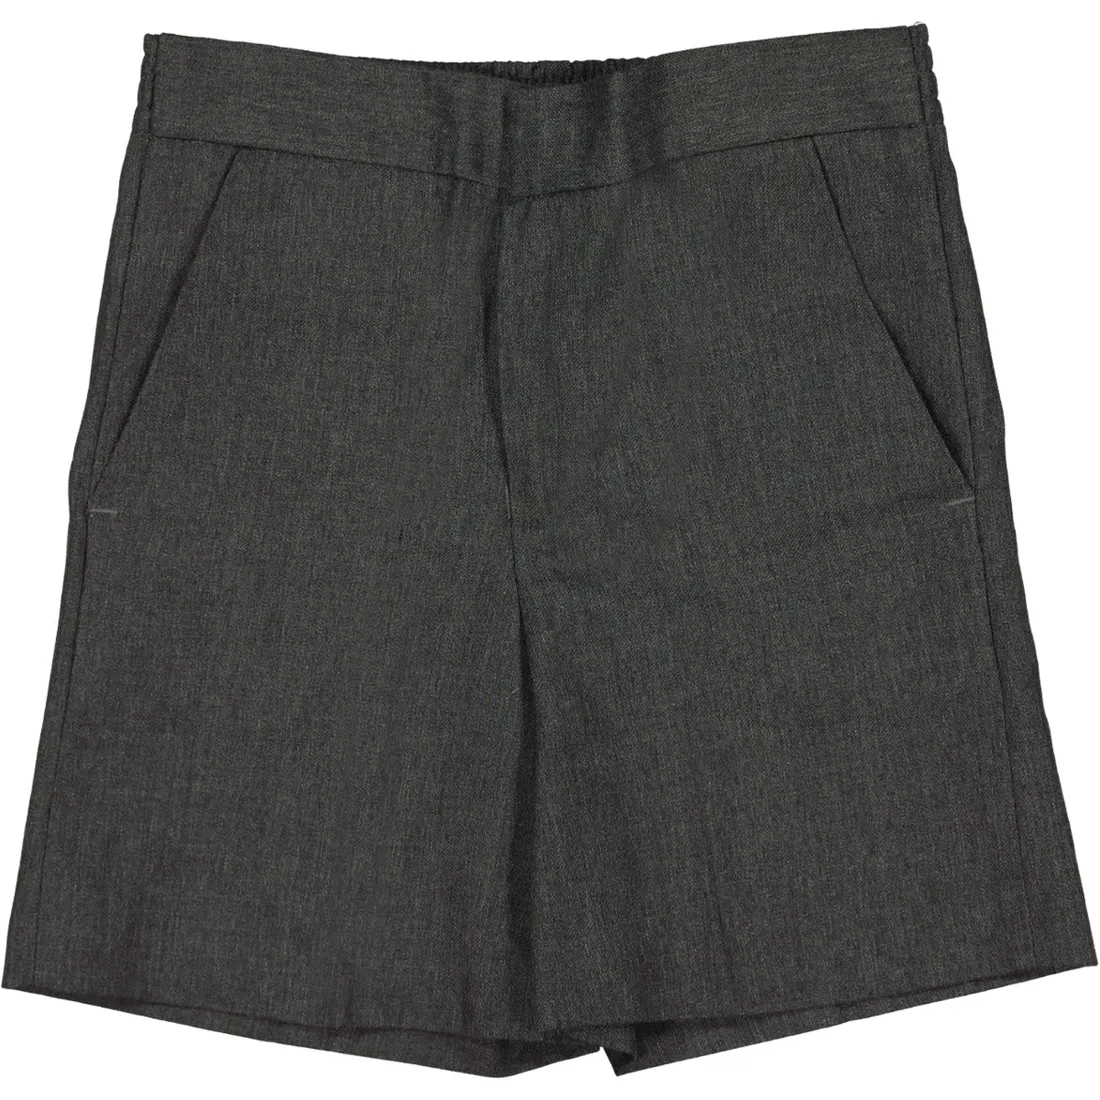 Grey School Shorts | School | PEP